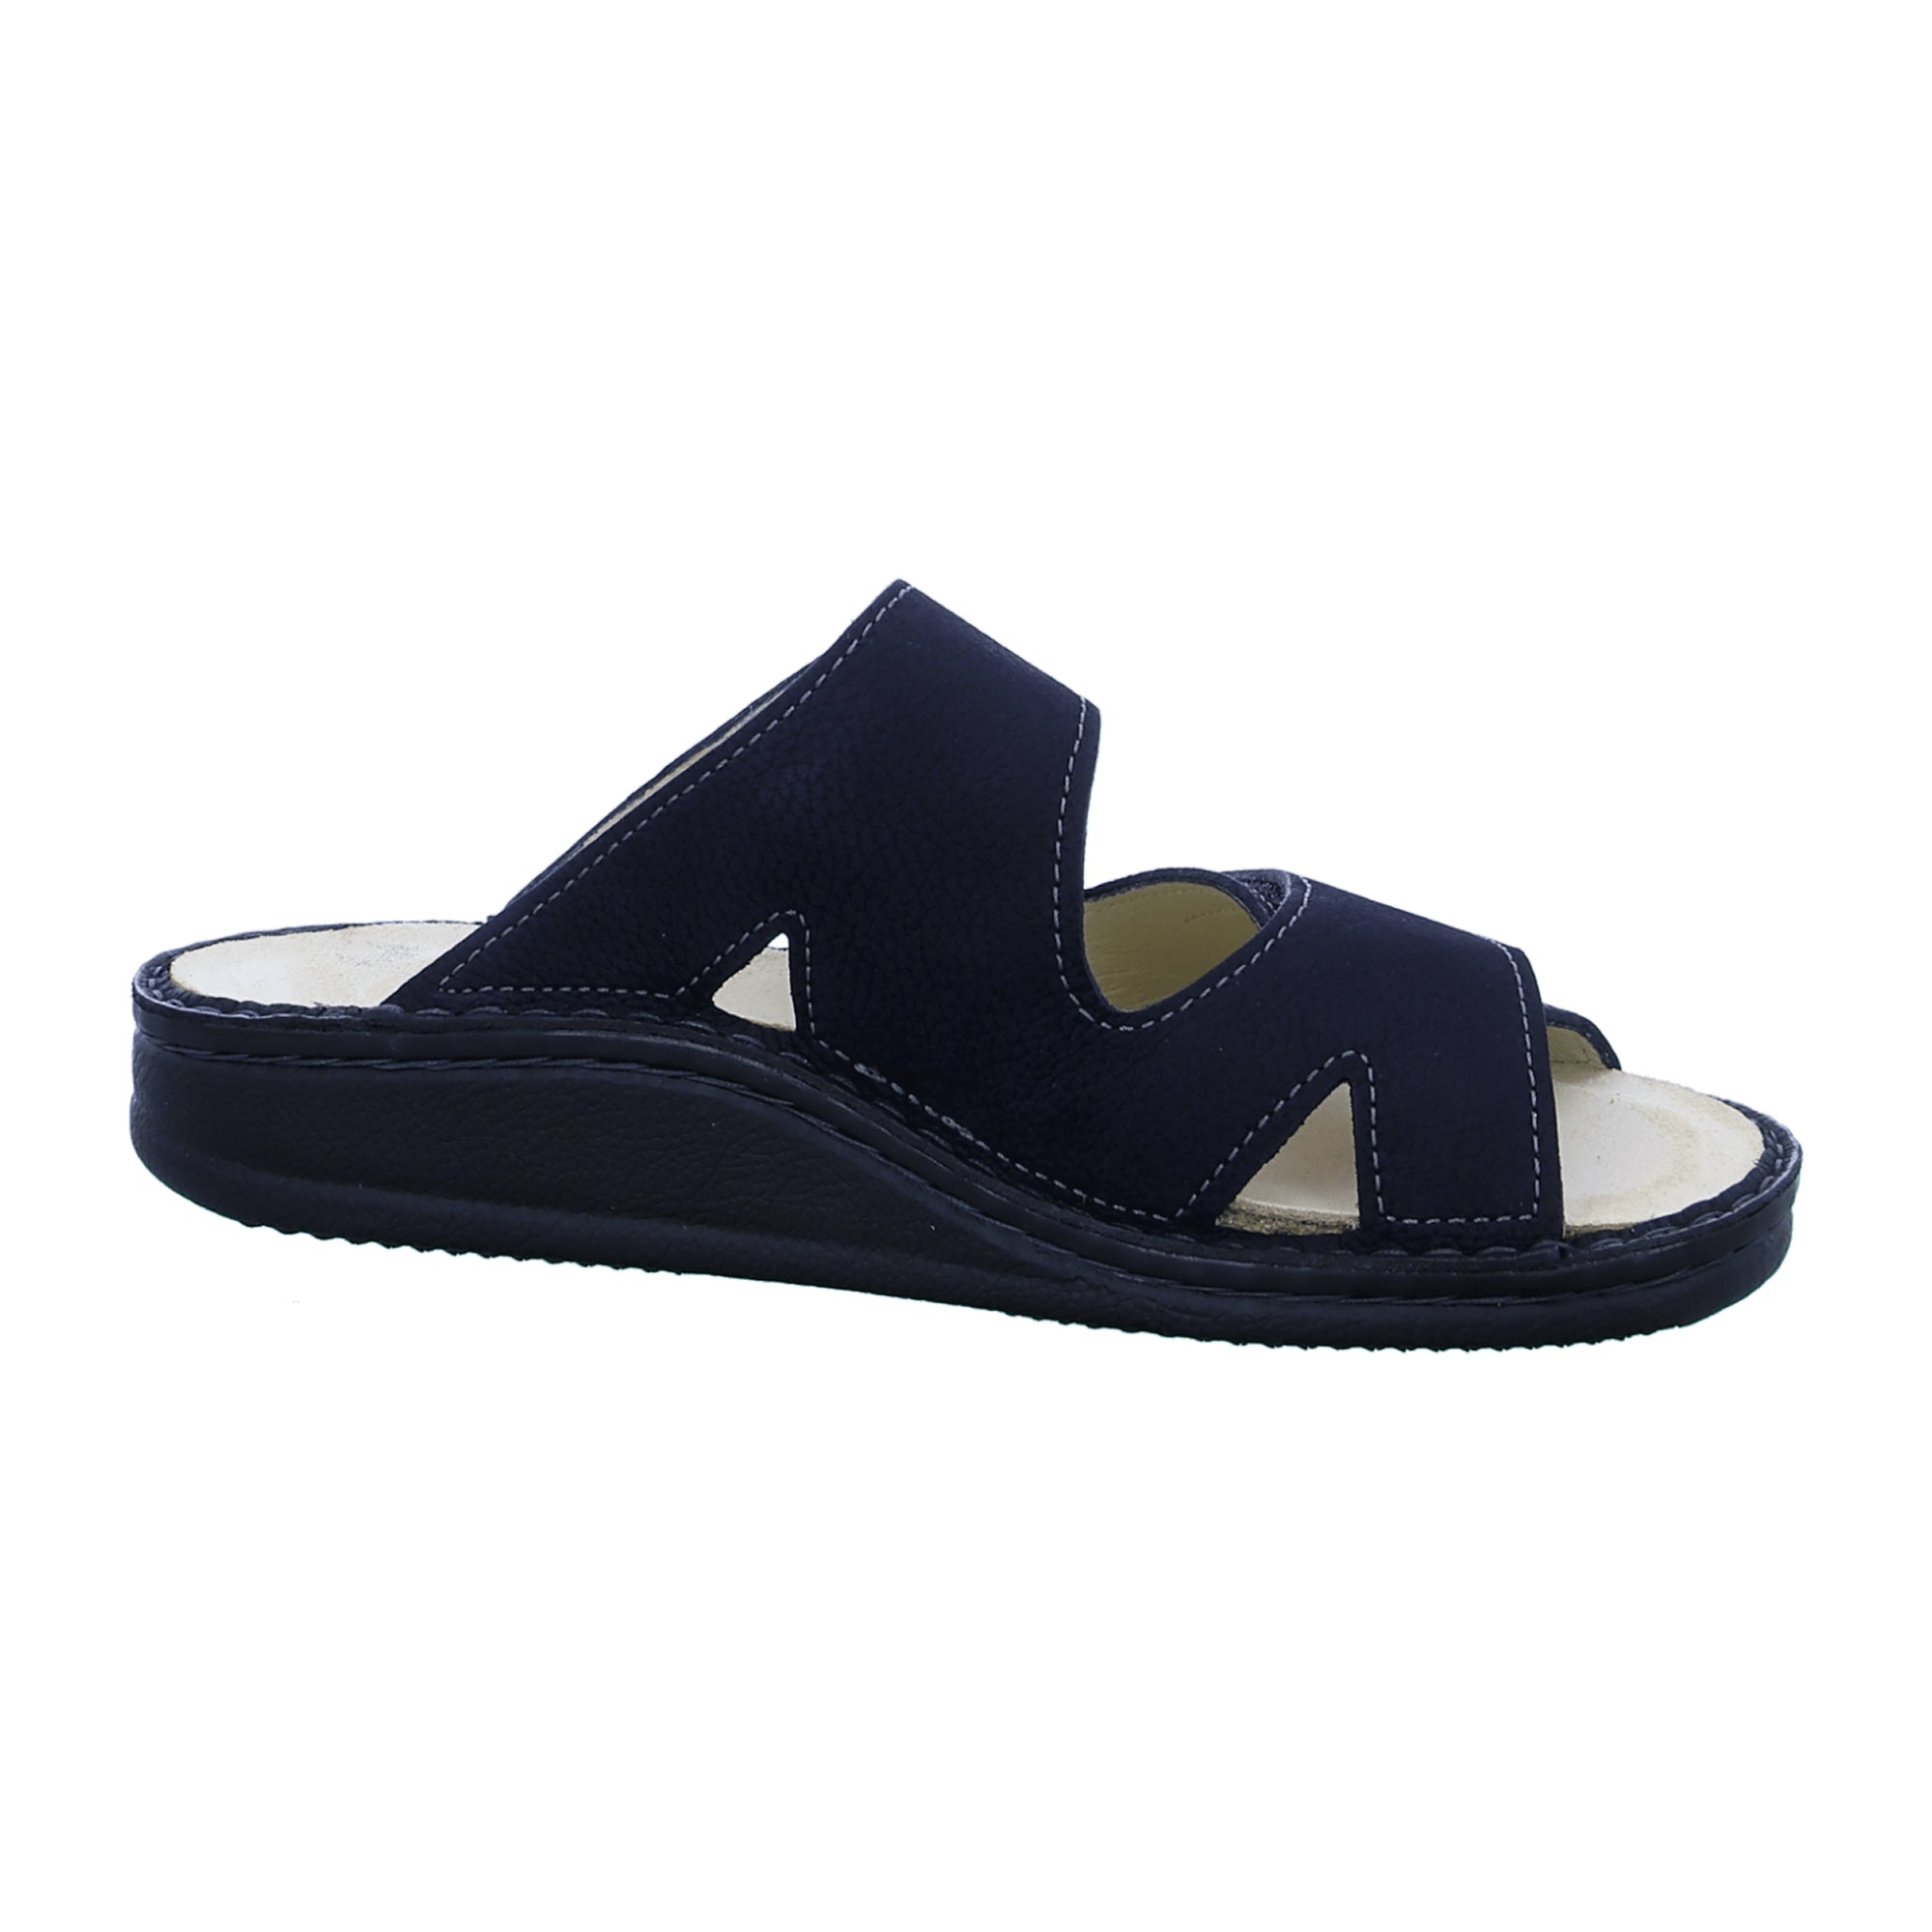 Finn Comfort Danzig-S Men's Comfort Sandals - Stylish Blue Leather